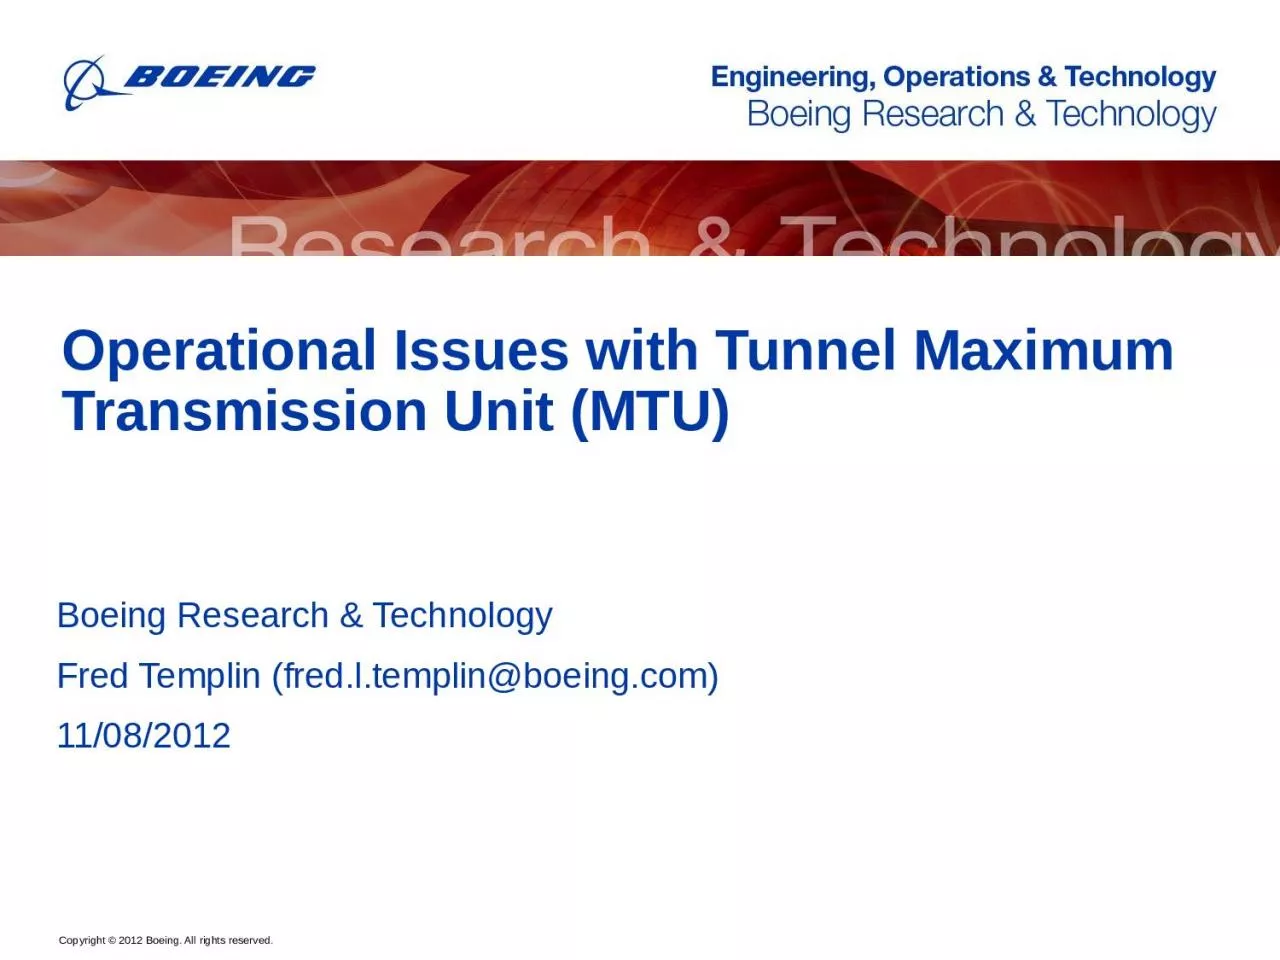 Operational Issues with Tunnel Maximum Transmission Unit (MTU)